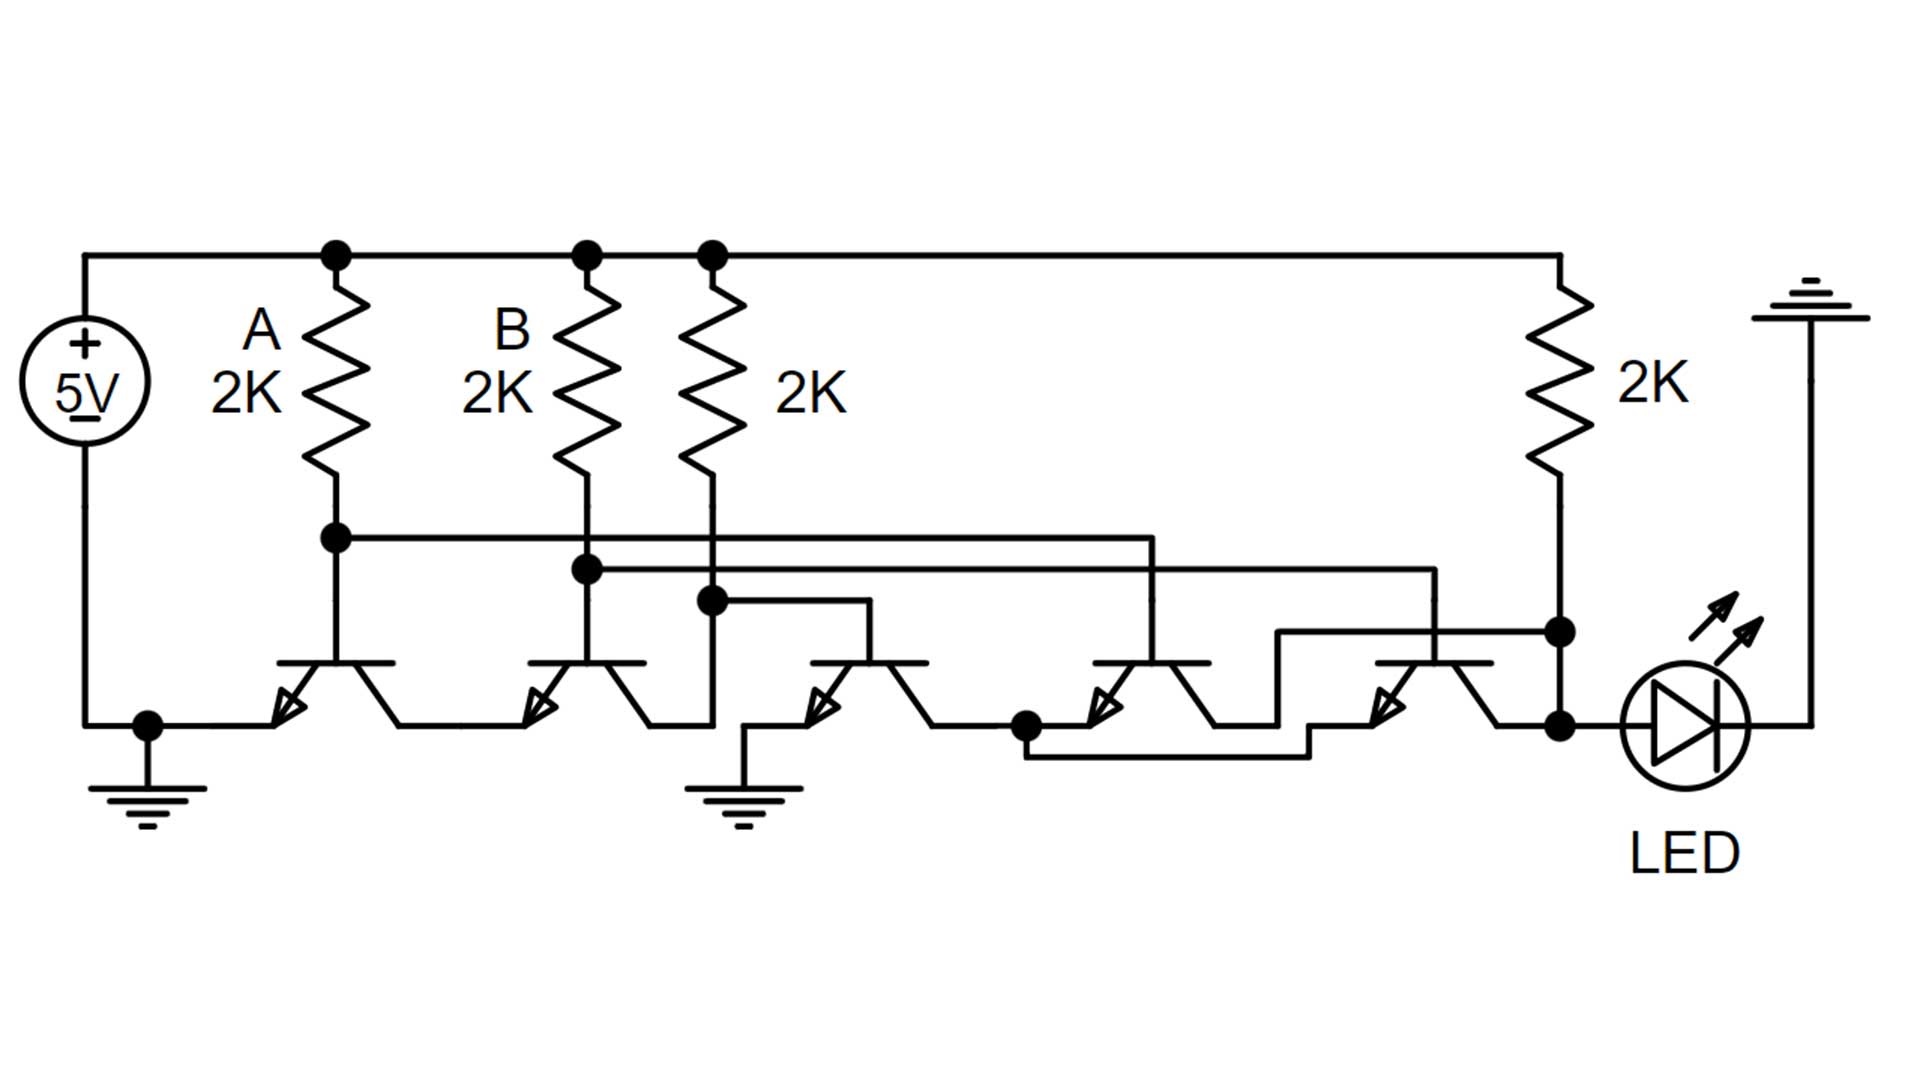 xnor circuit diagram